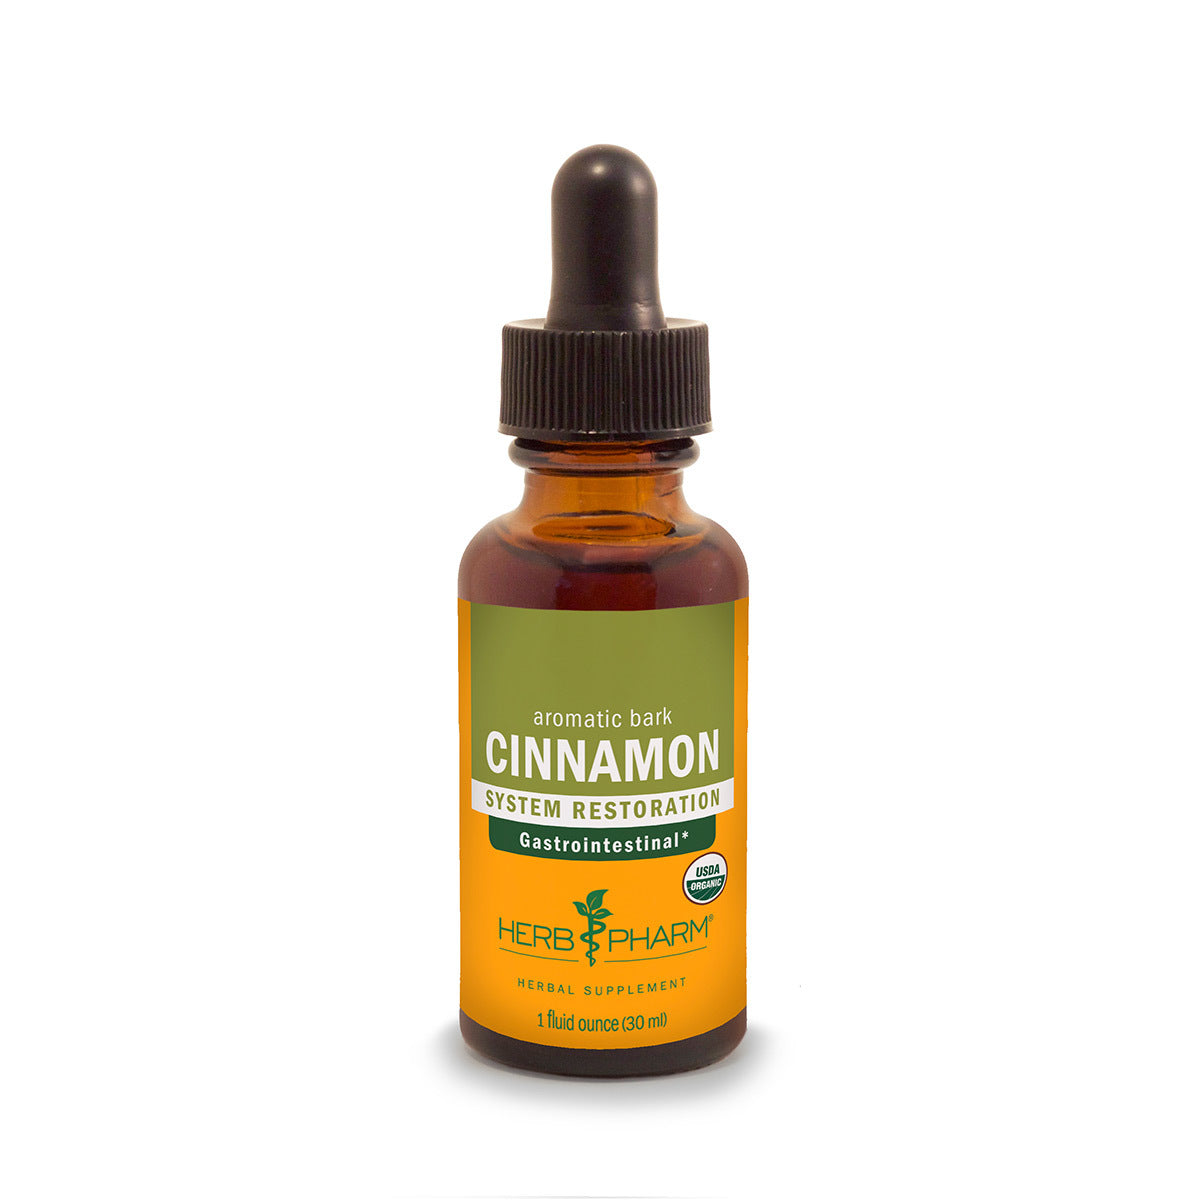 Primary image of Cinnamon Extract